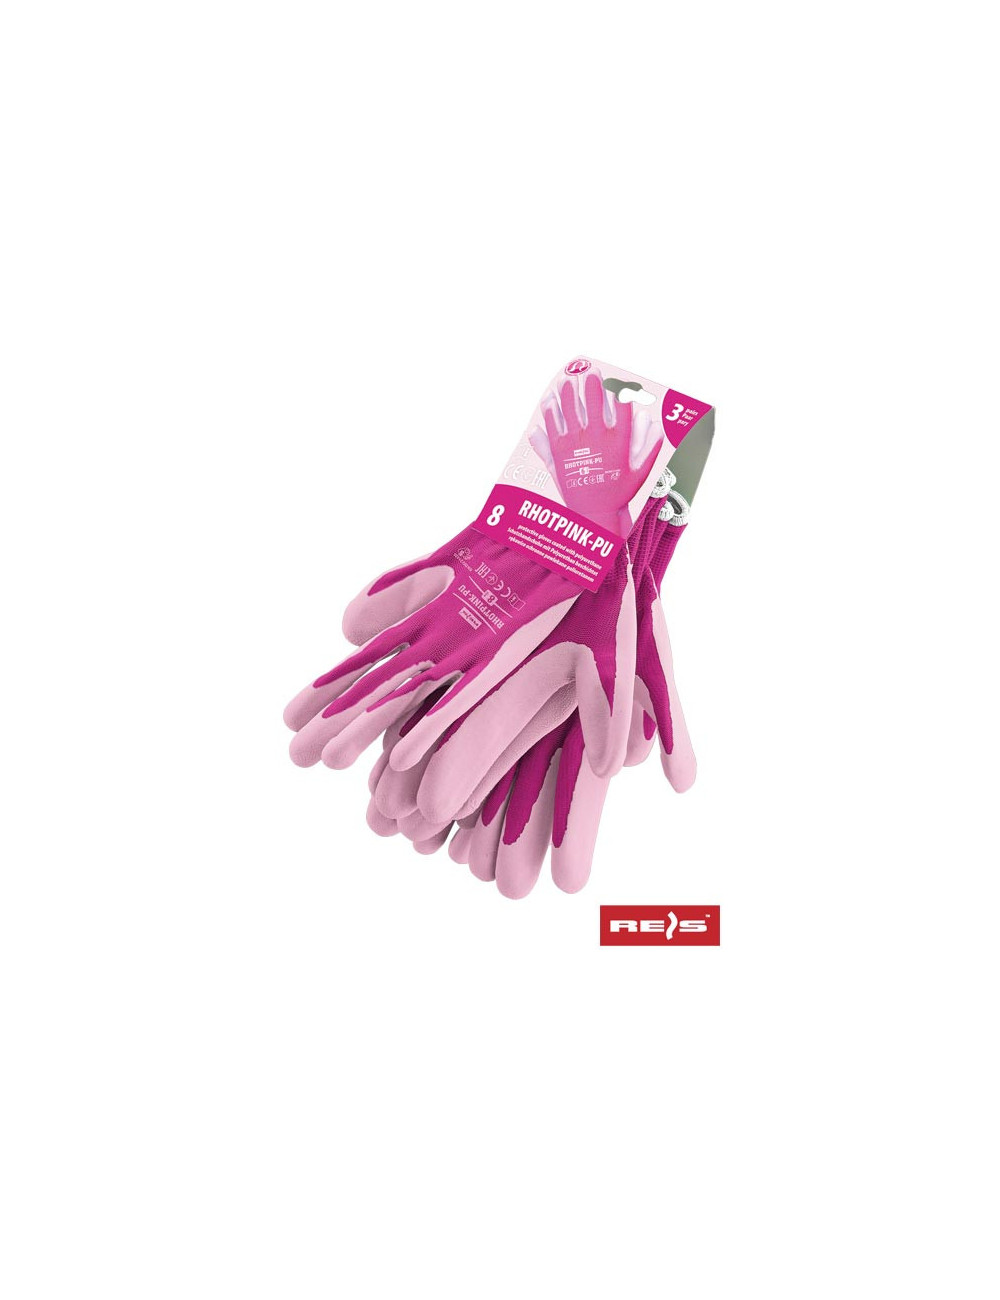 Protective gloves rhotpink-pu rw pink-white Reis